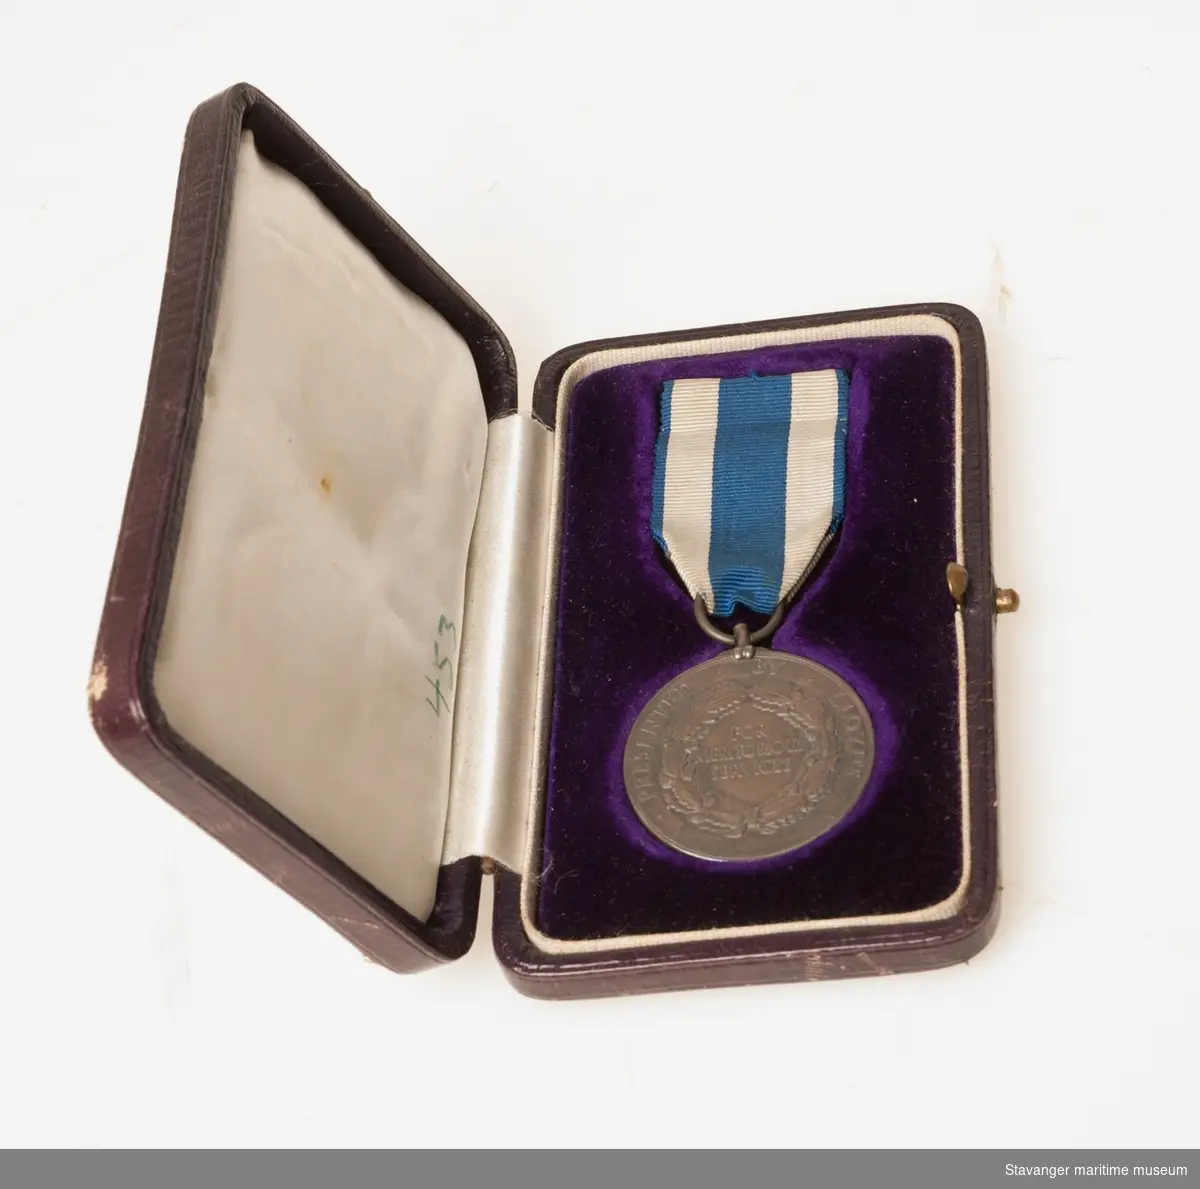 Lloyd´s Silver medal for Meritorious Service i et etui.